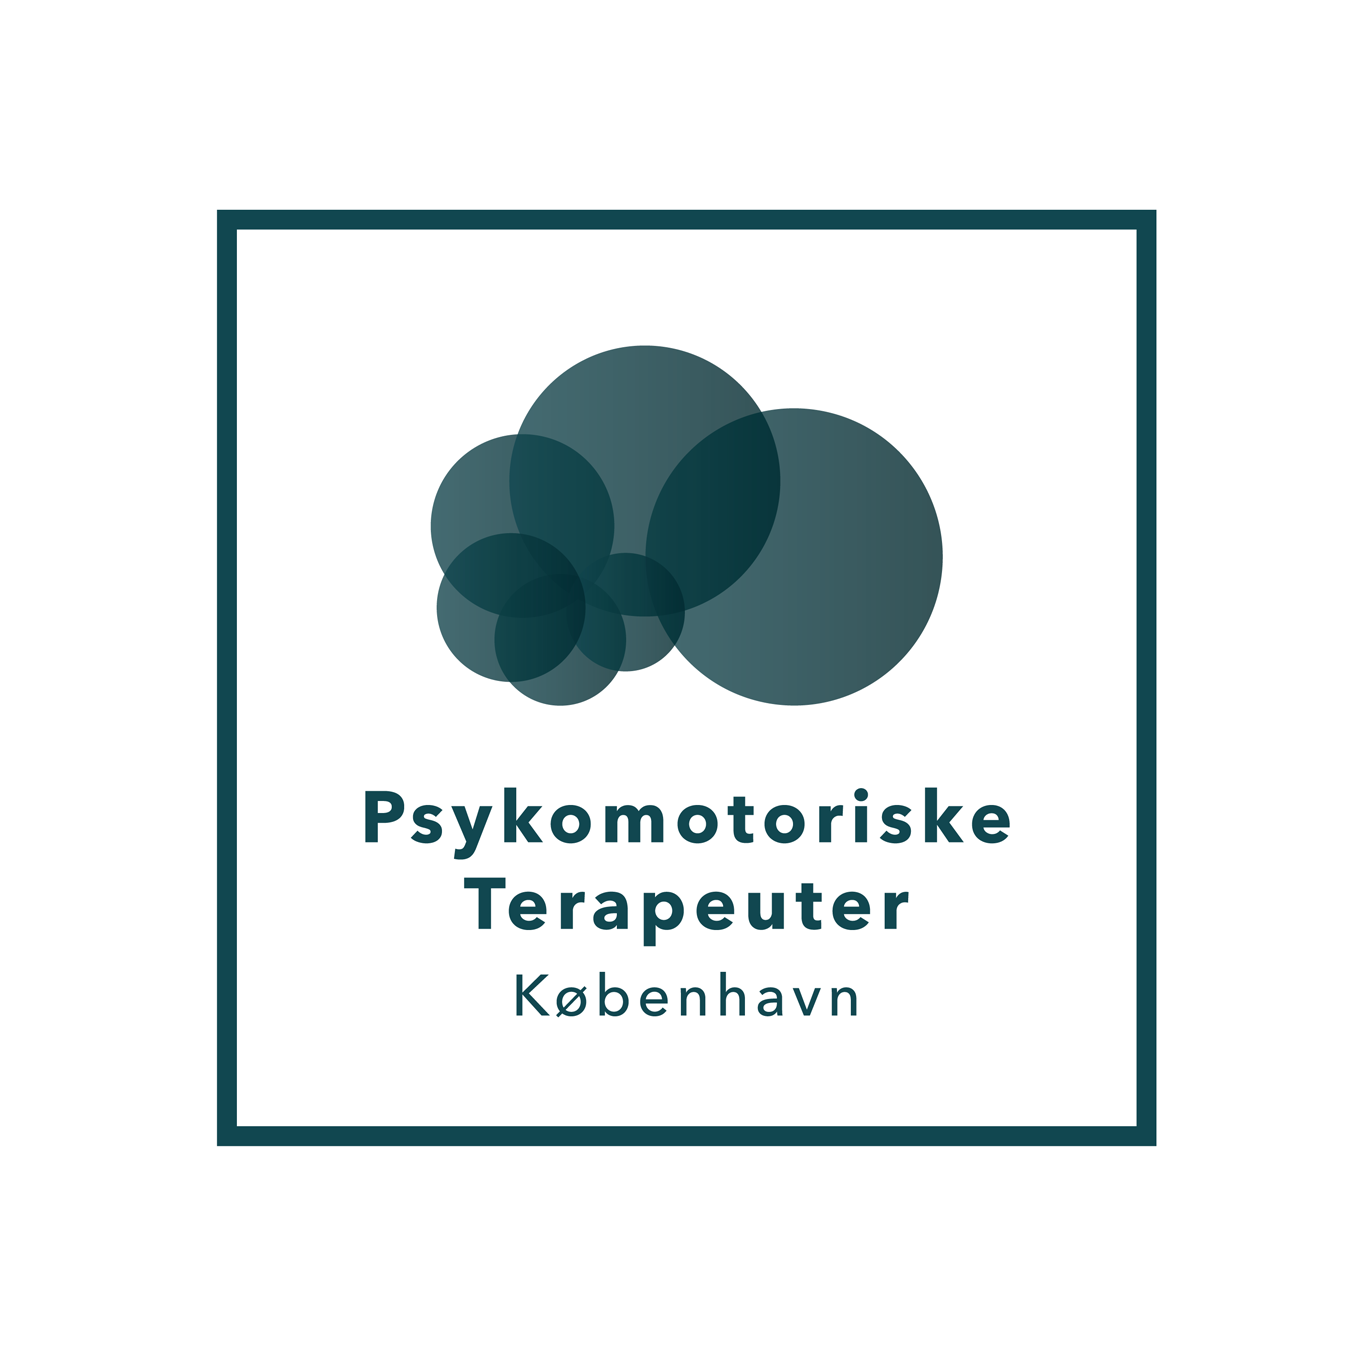 pmtk_logo